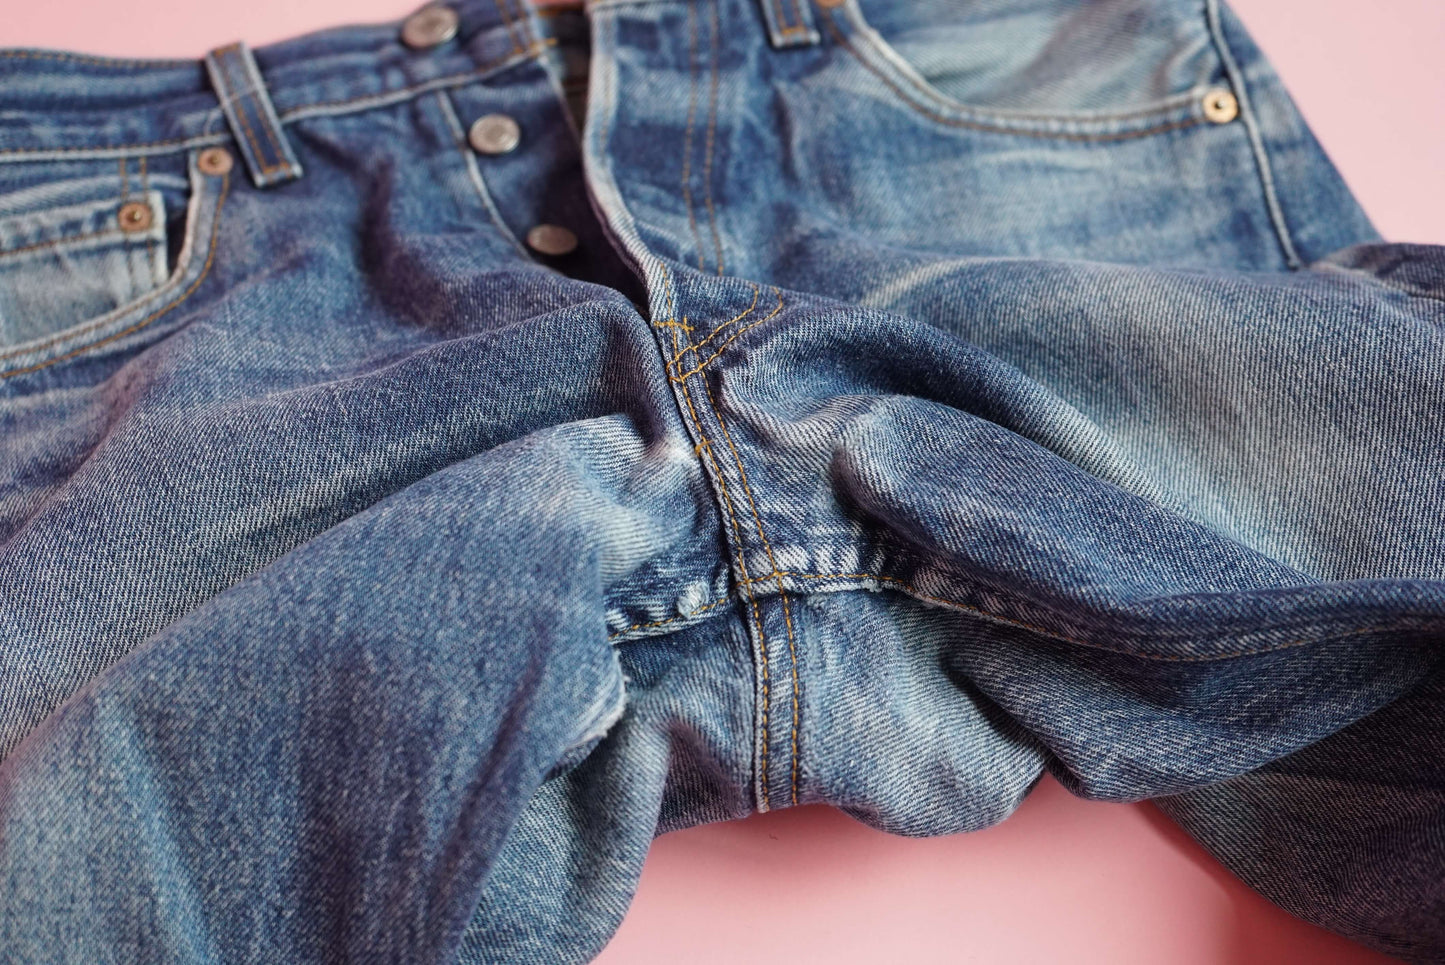 Vintage Levis 501 XX Jeans Distressed Faded W28-29